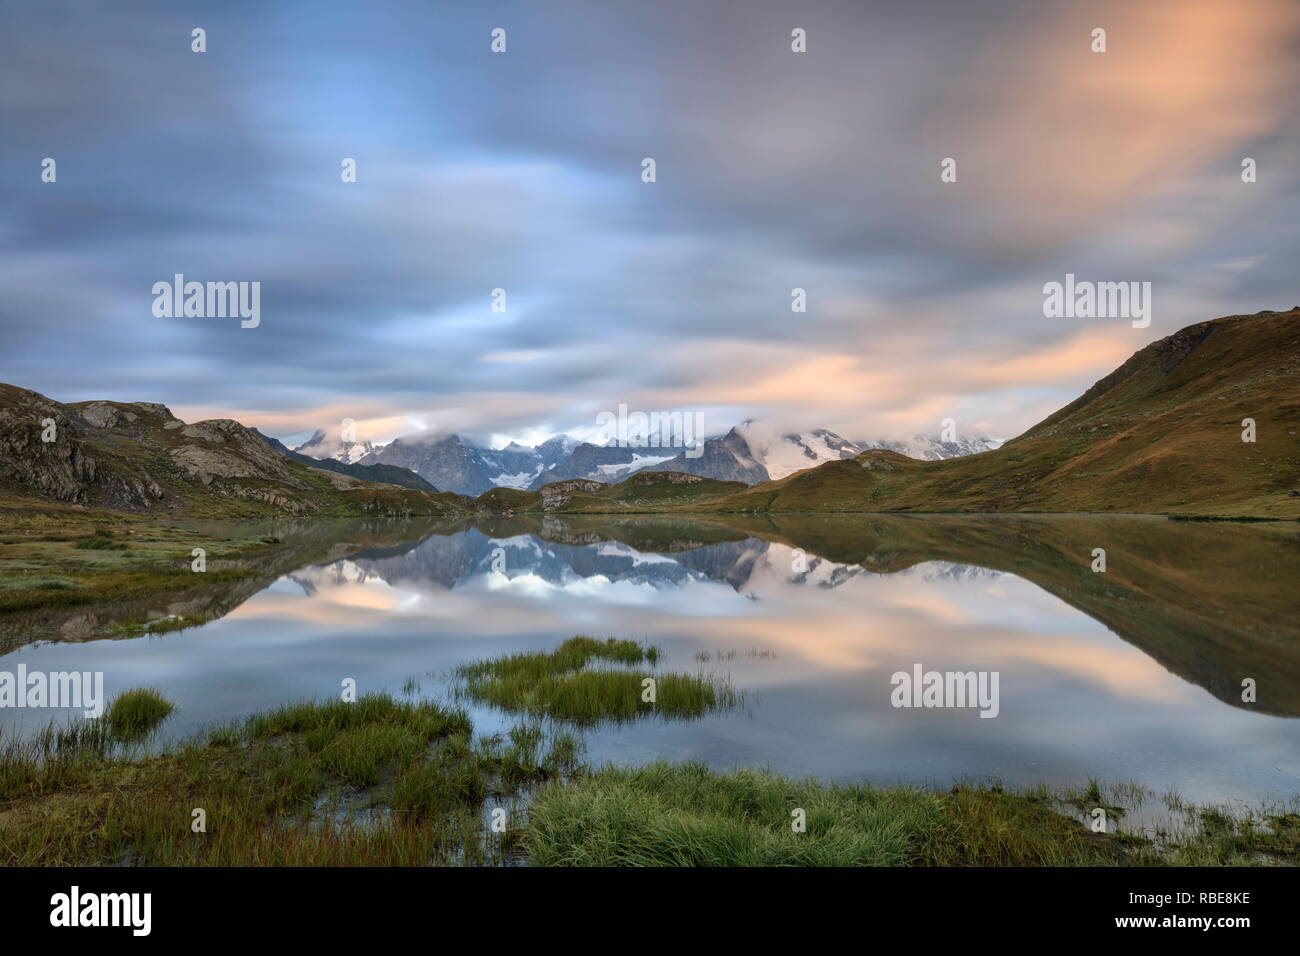 Le cime innevate sono riflesse nei laghi Fenetre all'alba Ferret Valley Saint RhÃ©mio Gran San Bernardo Valle d'Aosta Italia Europa Foto Stock